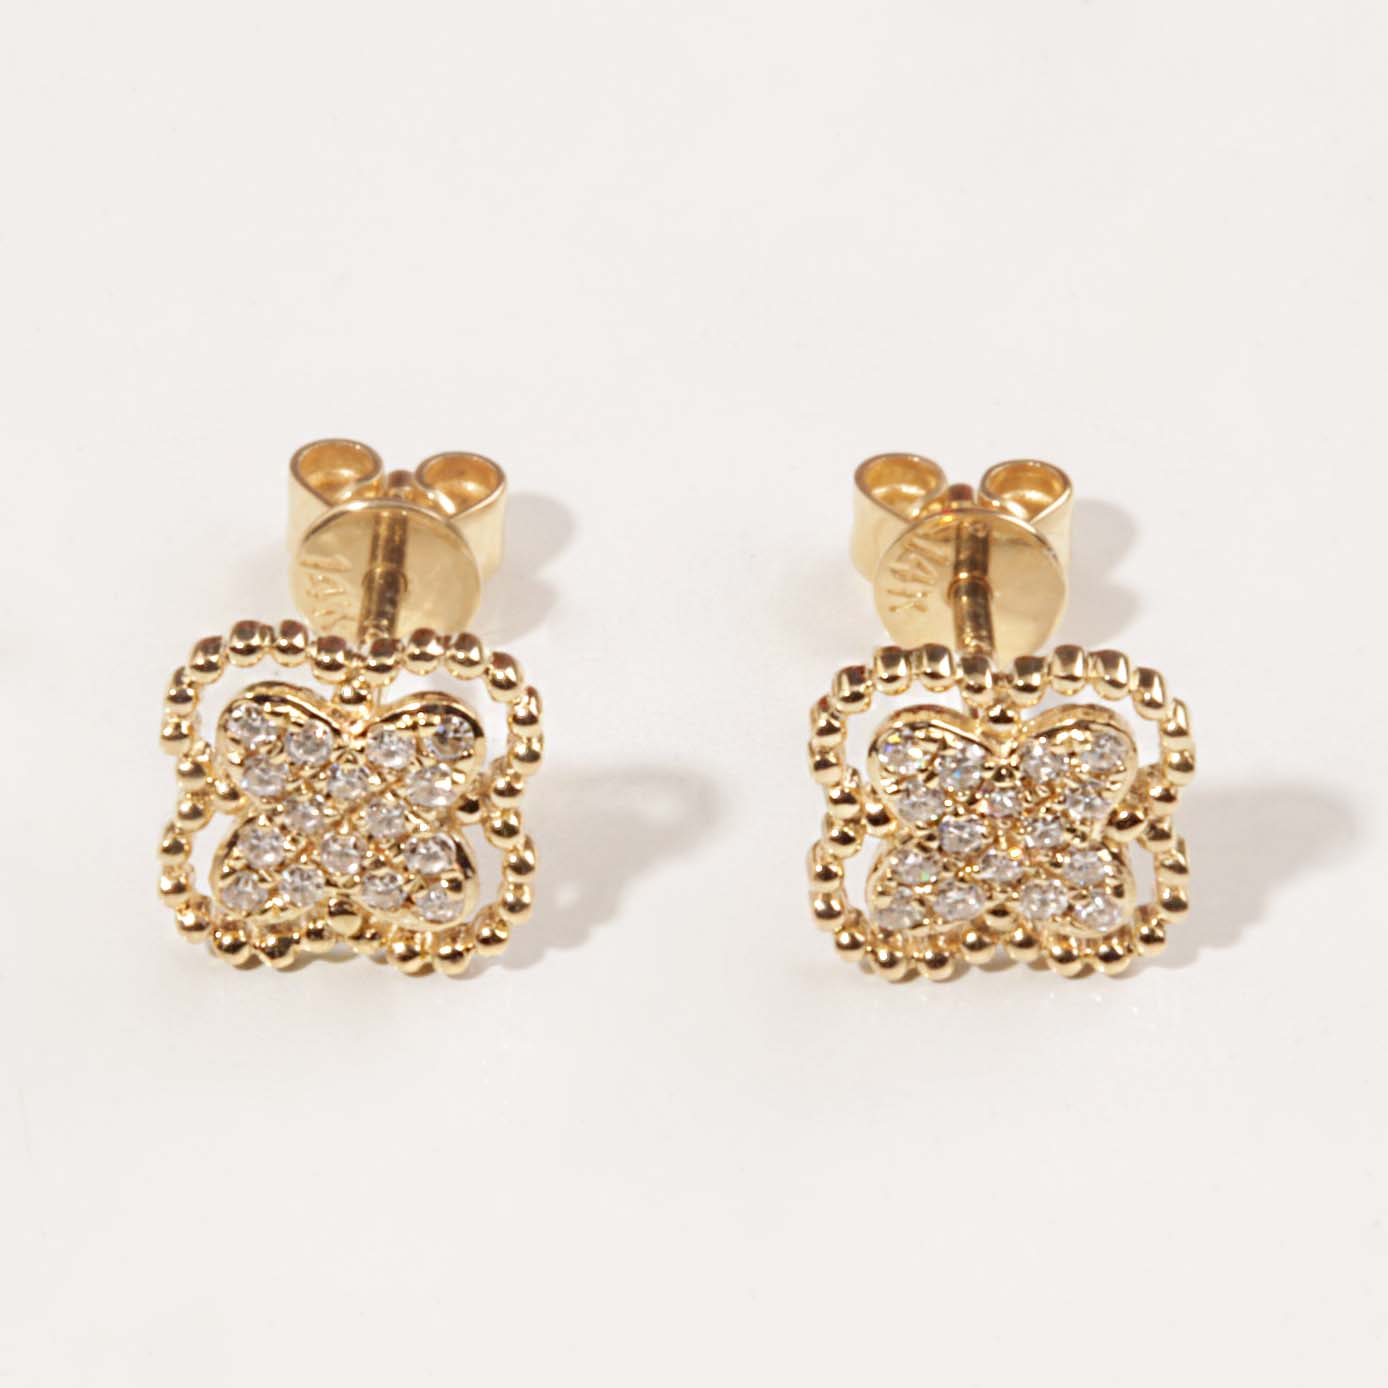 14KY .17tdw Diamond Fashion Earrings #150-00116